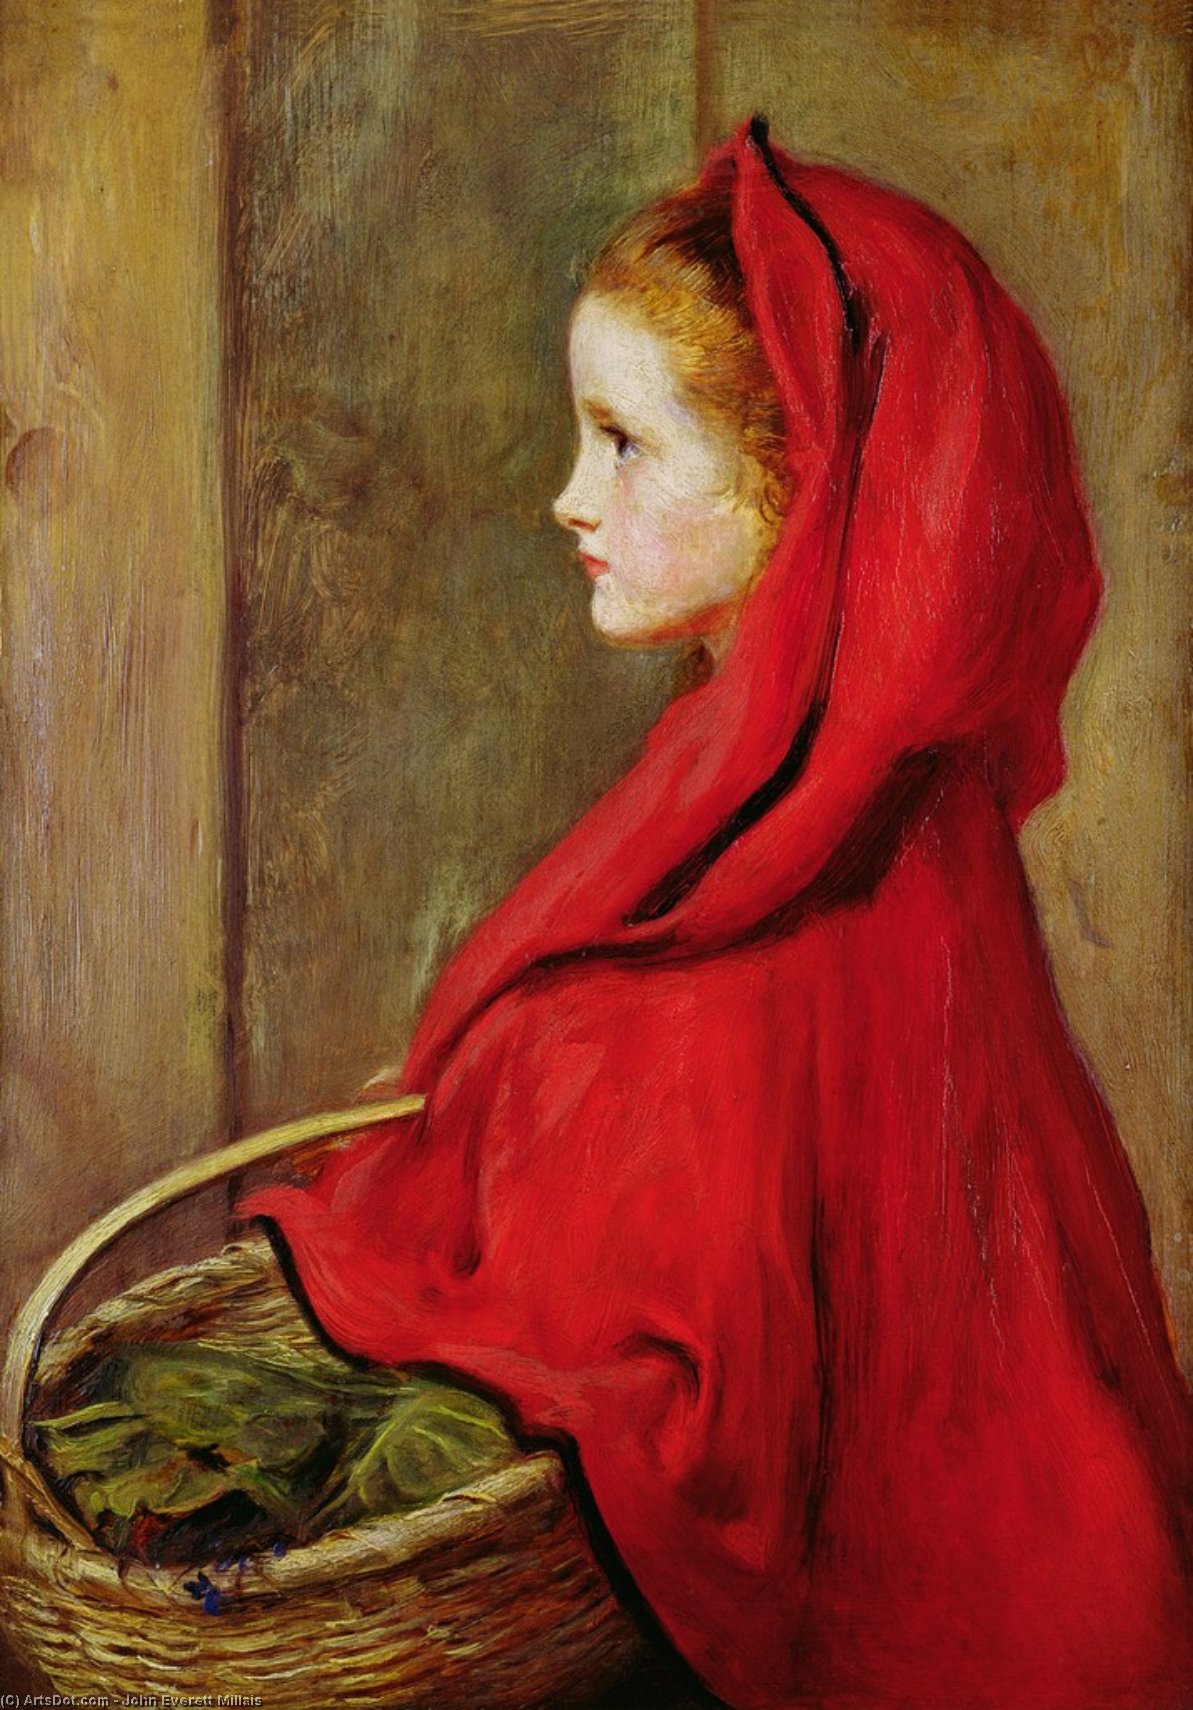 Buy Museum Art Reproductions Red Riding Hood by John Everett Millais | ArtsDot.com